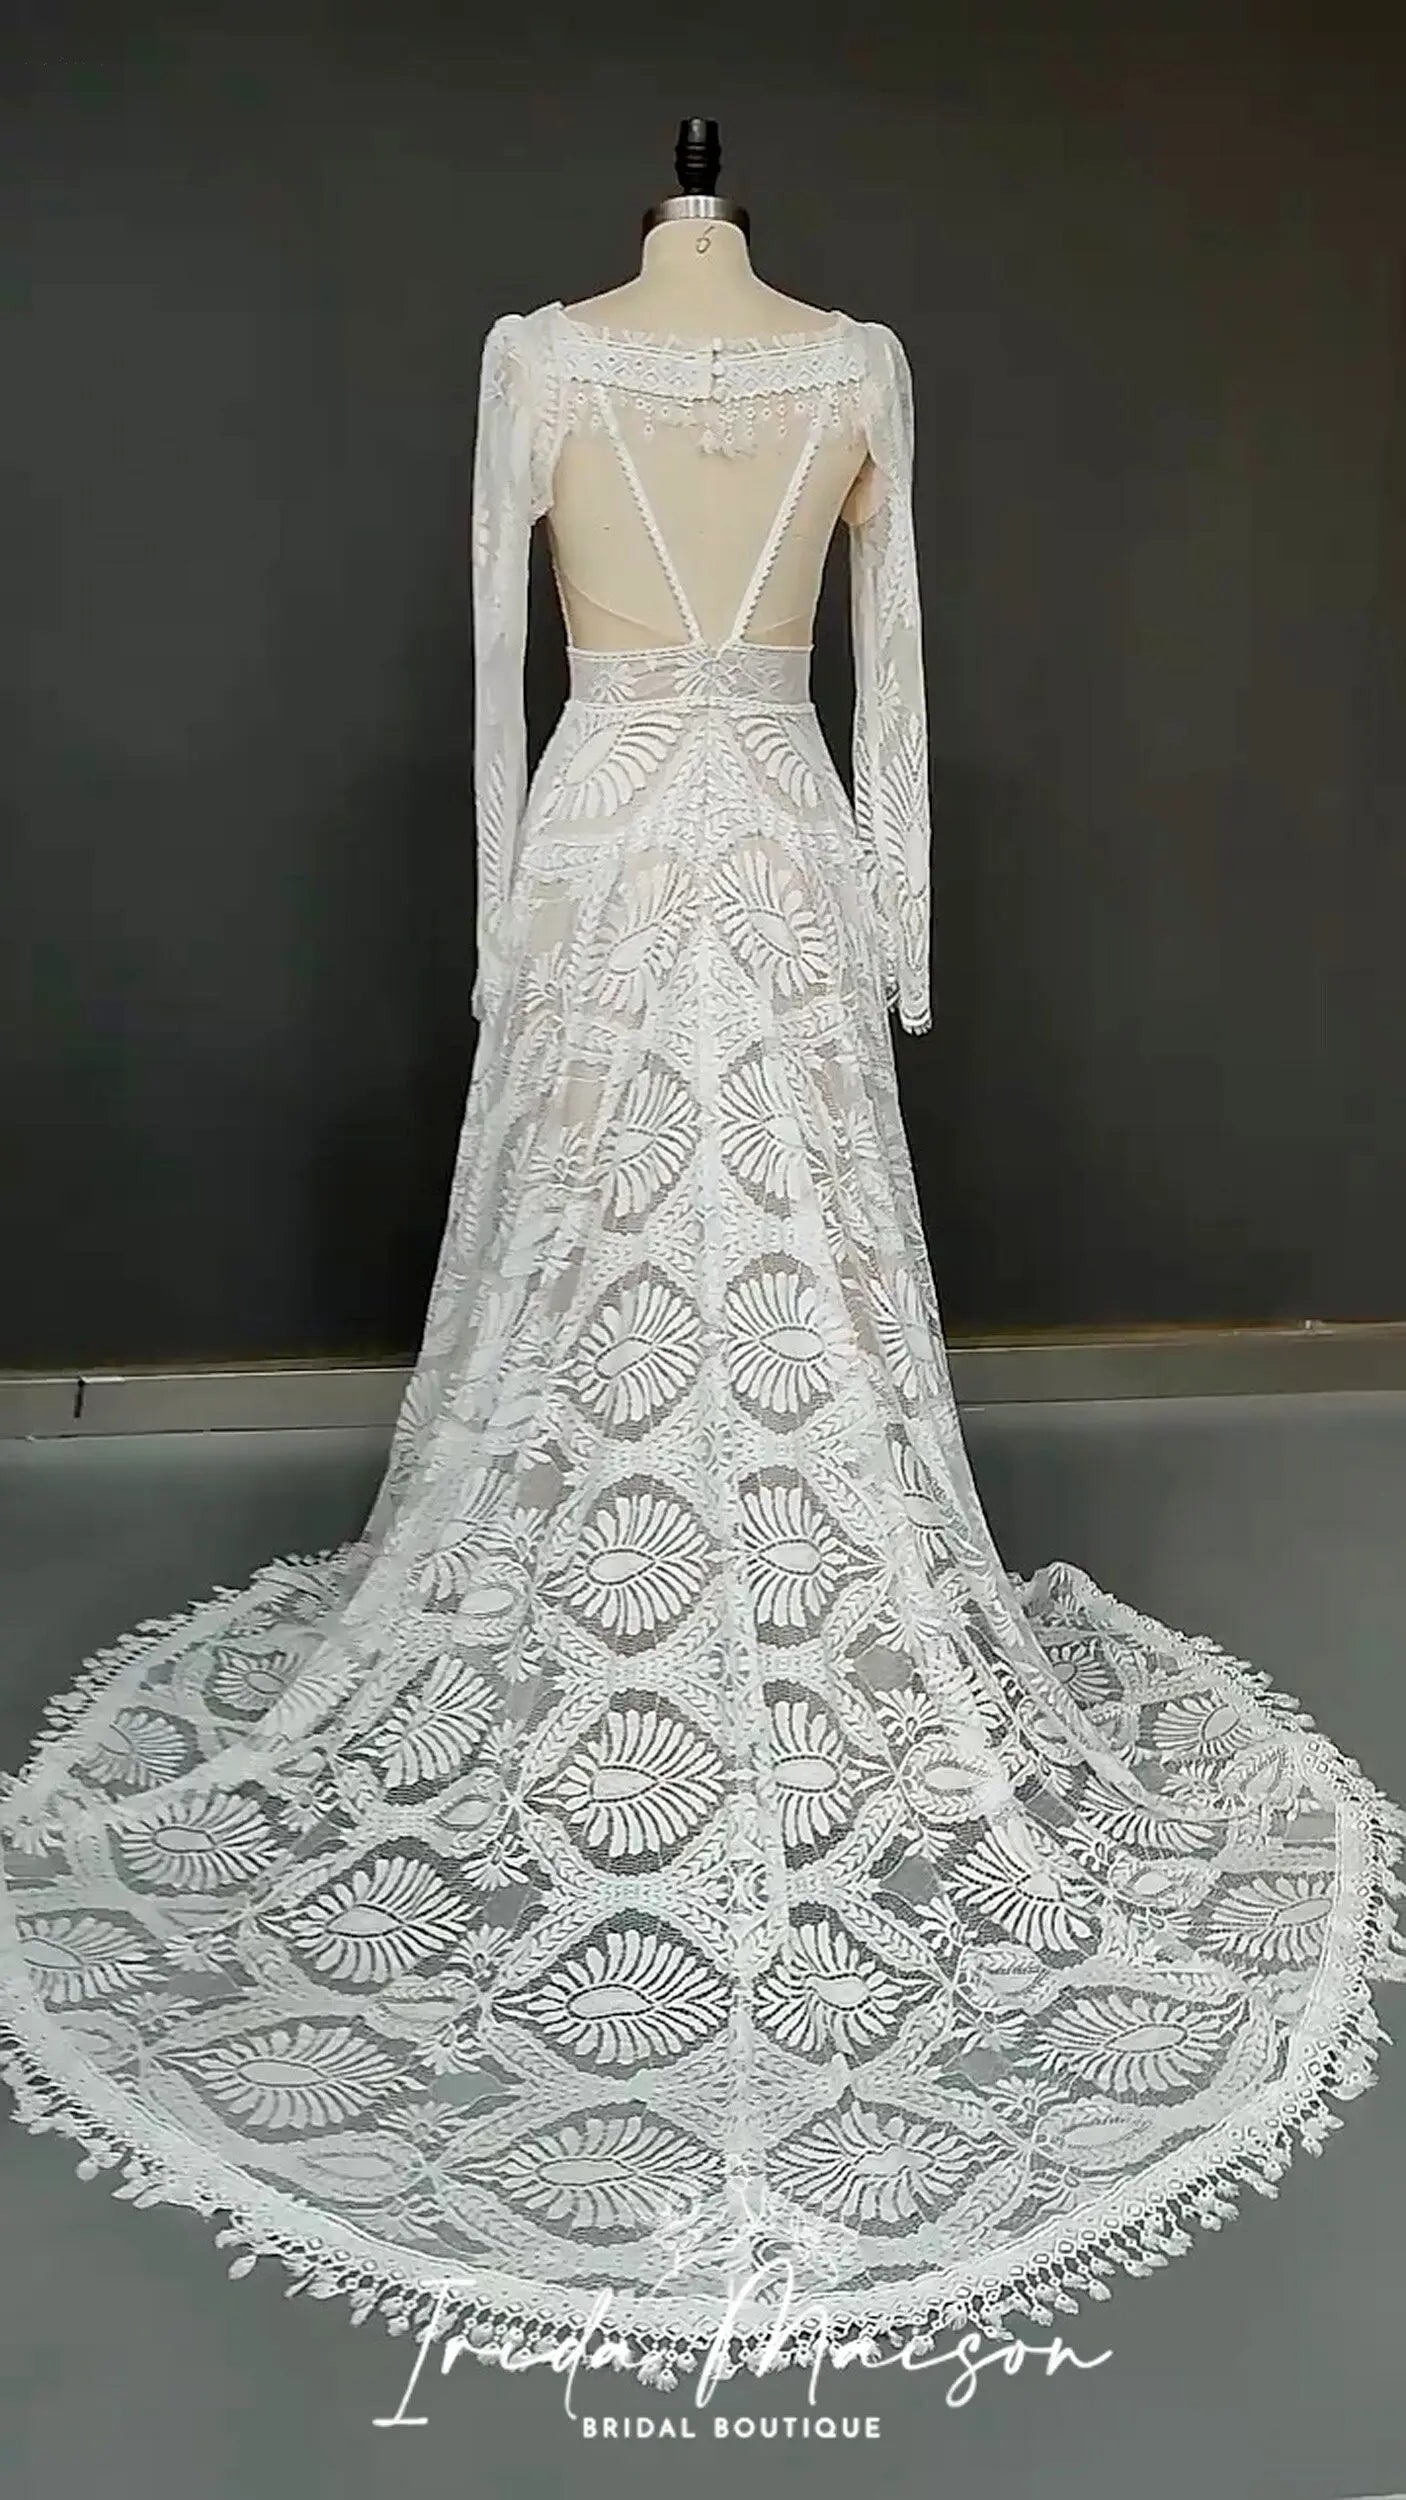 Bohemian elegant Lace Wedding Dress /removable sleeves shovel/ Beach wedding dress / bohemian lace dress/ wedding dress /spaghetti straps